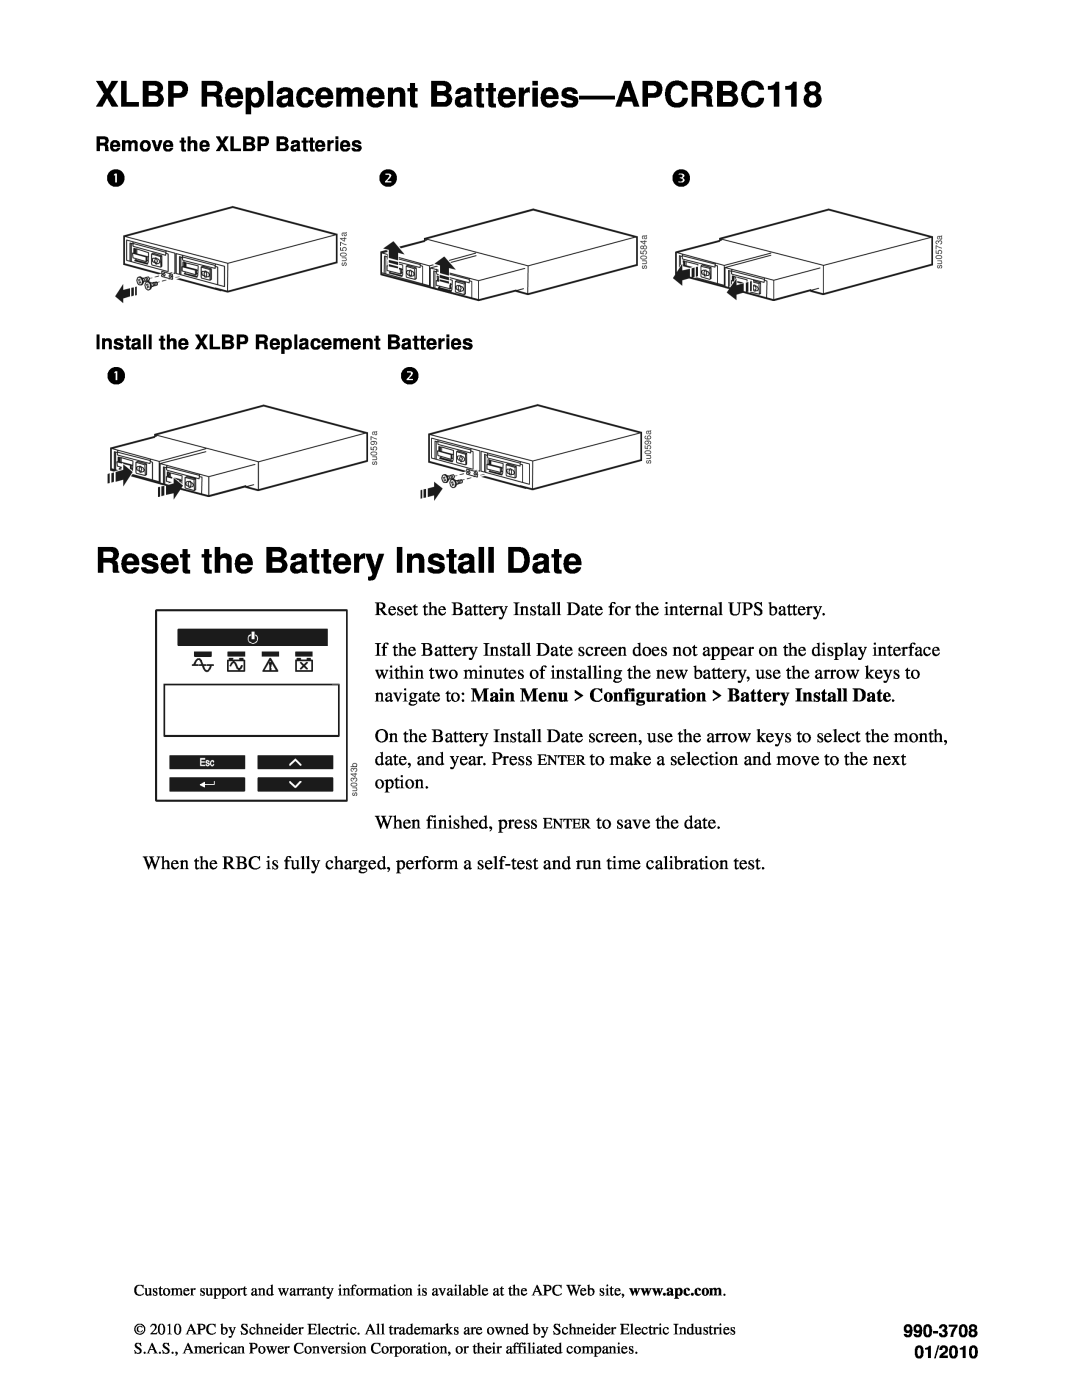 APC RBC 117, APCRBC117 XLBP Replacement Batteries-APCRBC118, Reset the Battery Install Date, Remove the XLBP Batteries 